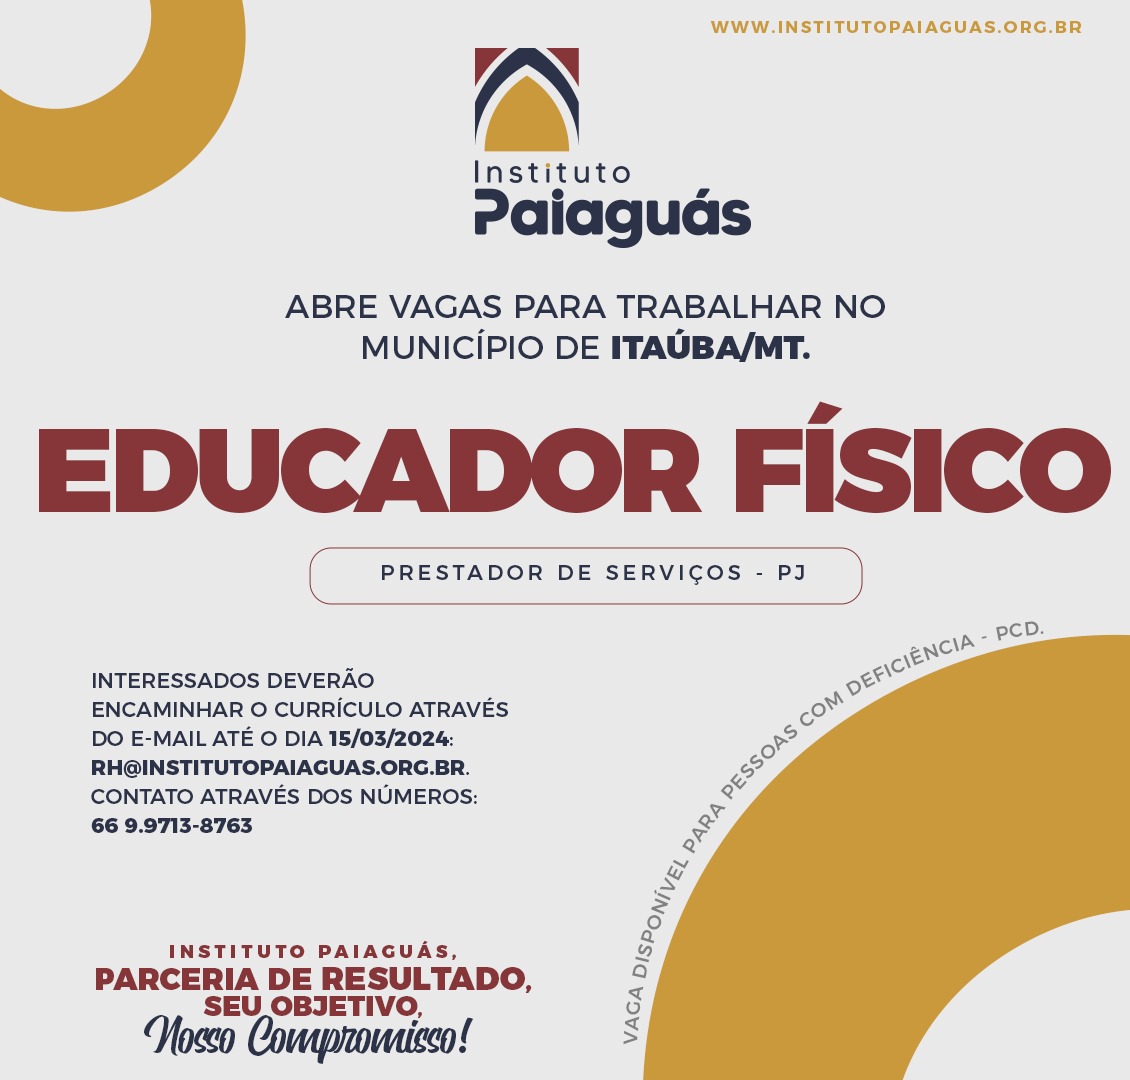 O INSTITUTO PAIAGUÁS, abre vagas para trabalhar no município de Itaúba/MT  Educador Físico.